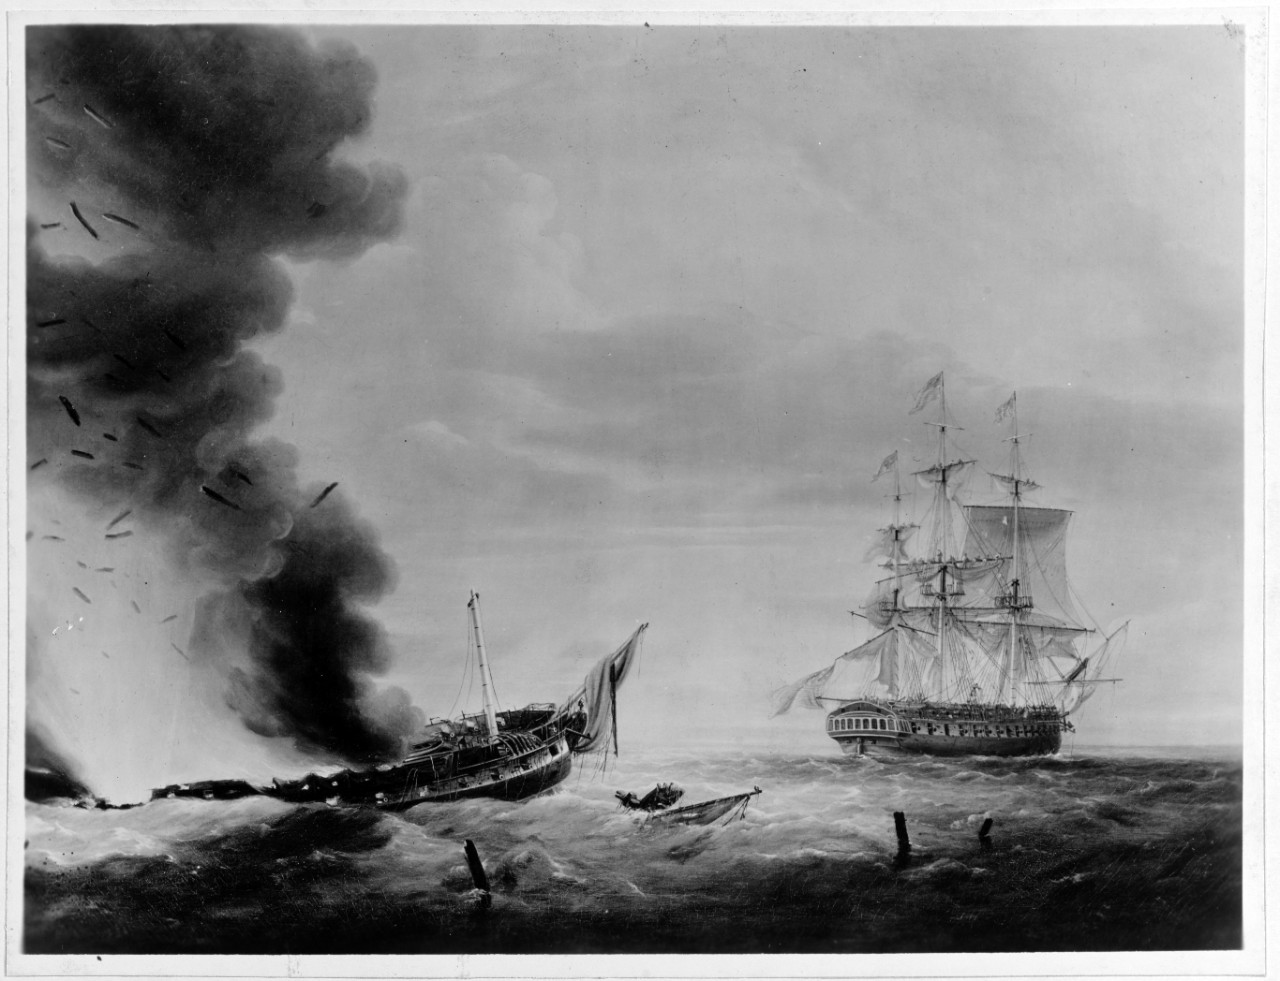 Photo #: NH 55413  U.S. Frigate Constitution destroys HMS Java, after capturing her off the coast of Brazil on 29 December 1812